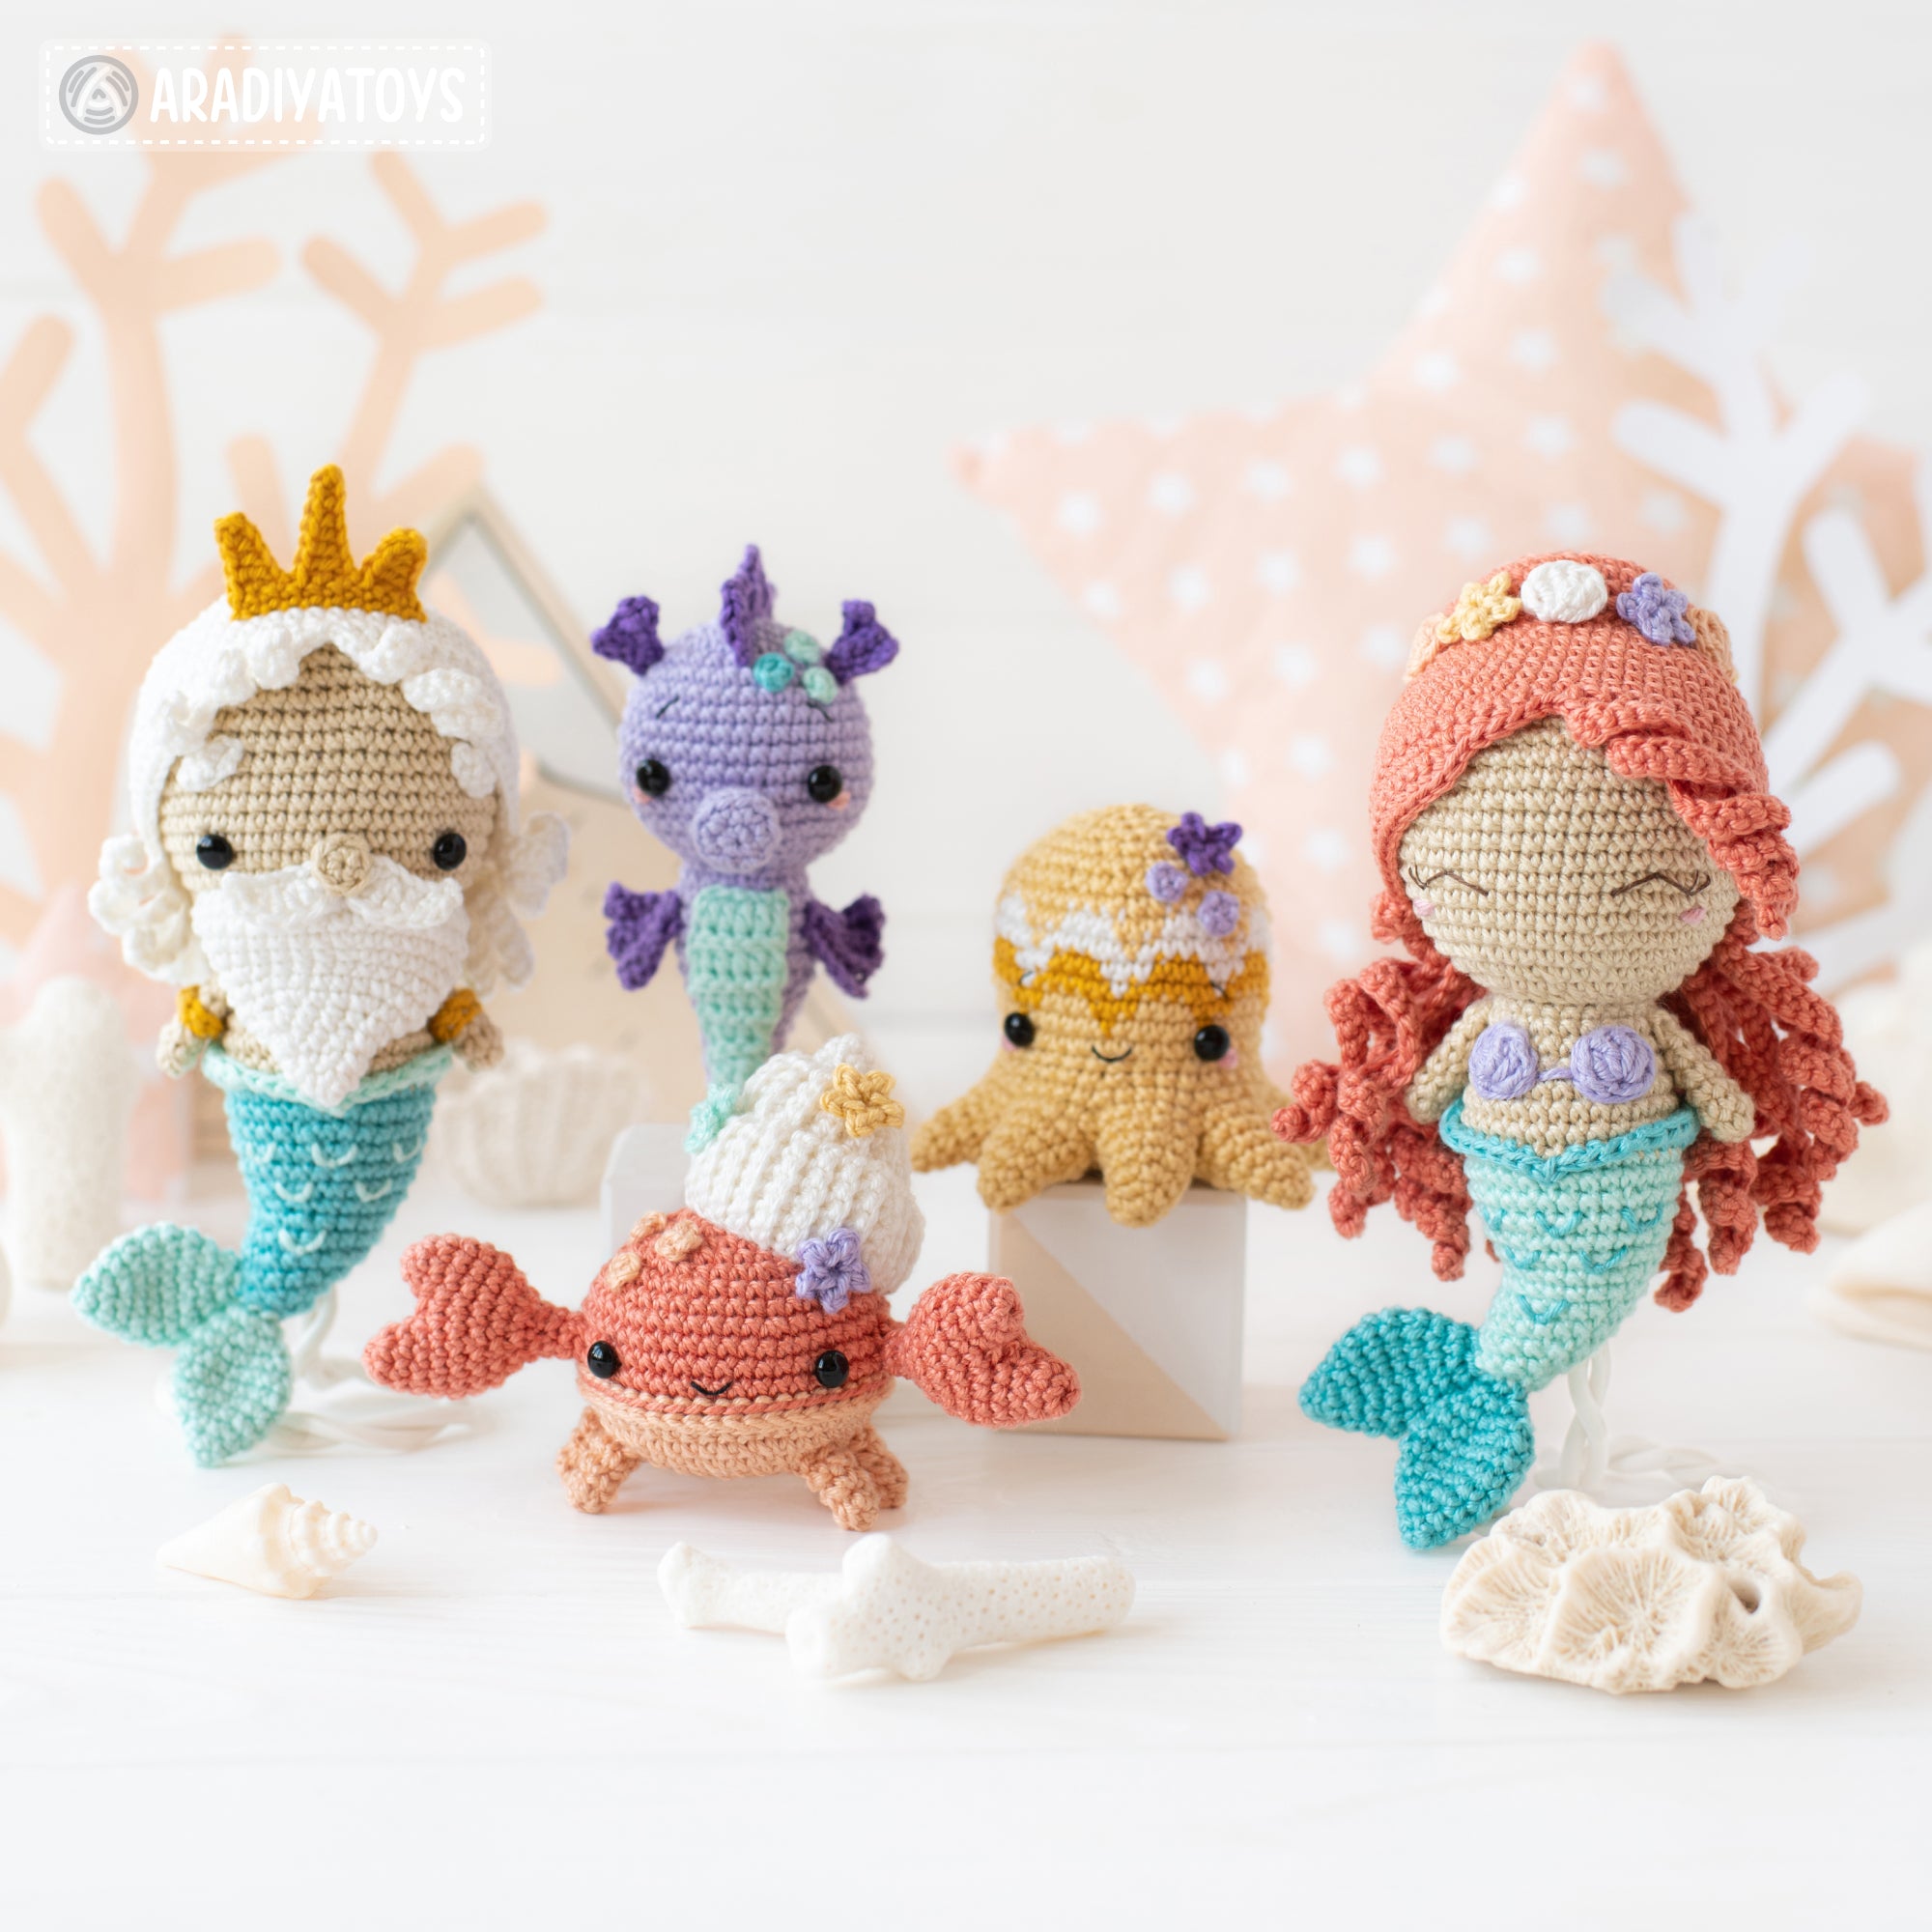 Kawaii Ocean Minis from “AradiyaToys Minis” collection / crochet patte